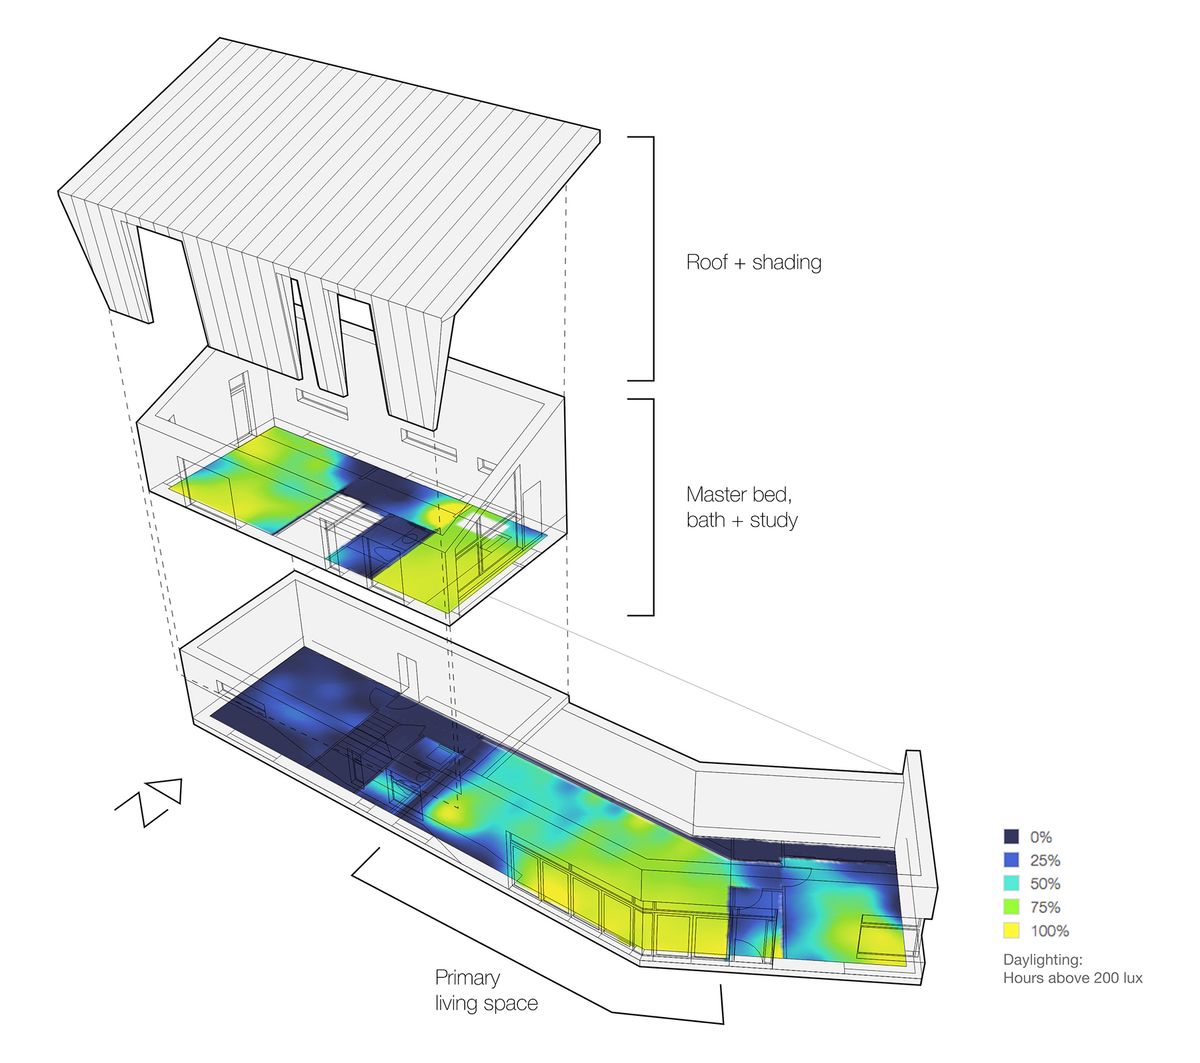 Net Zero Energy Home, a post-occupancy assessment